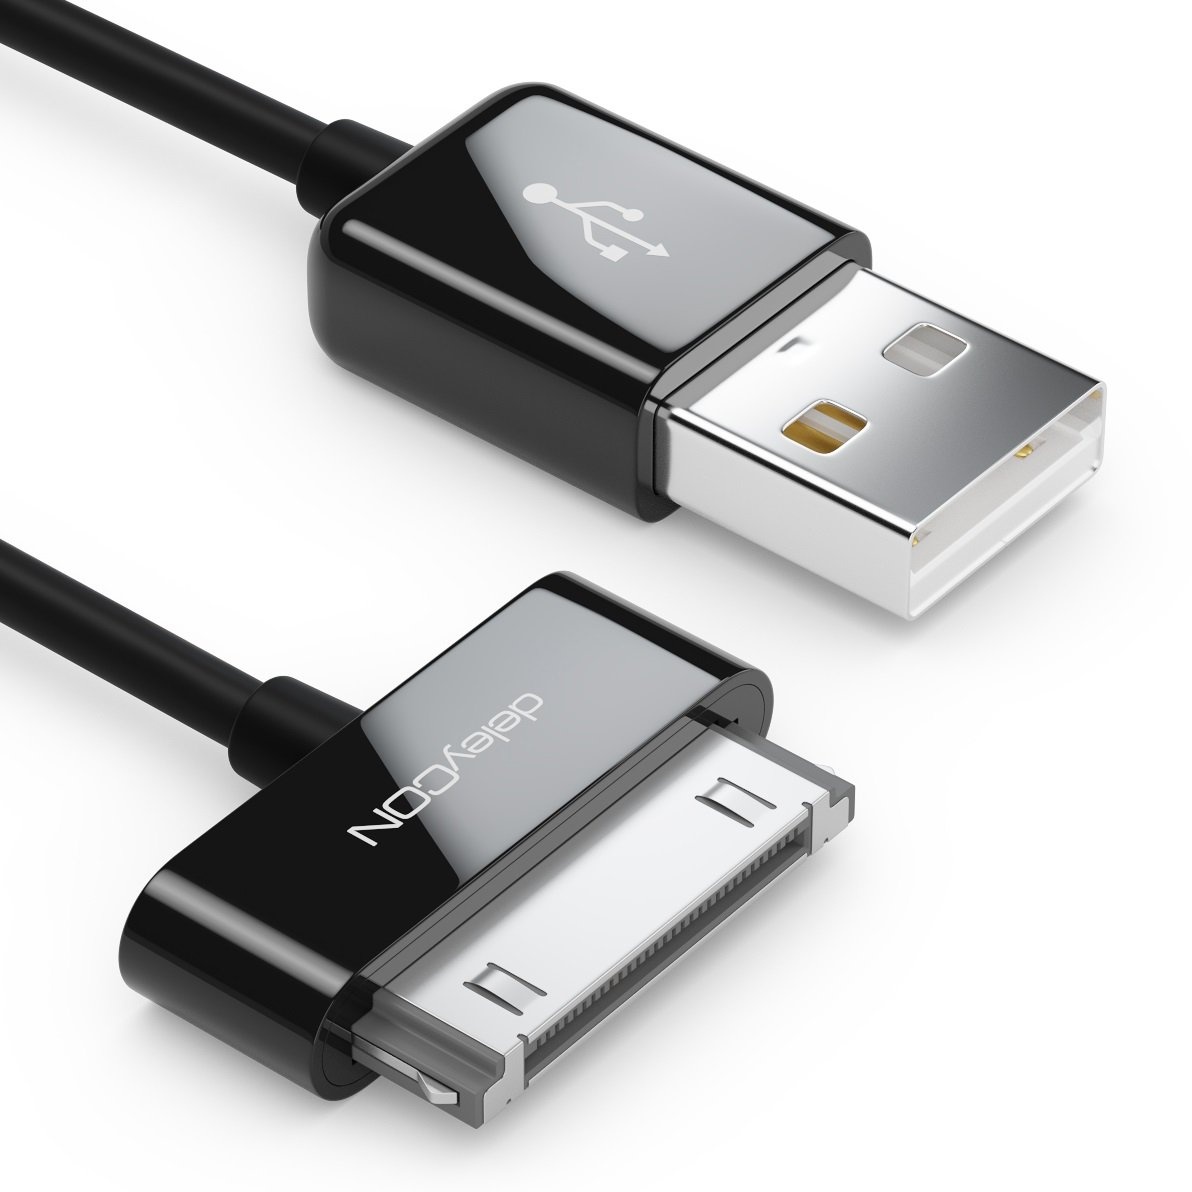 deleyCON 0,5m 30-Pin USB Kabel Dock Connector Sync-Kabel Ladekabel Datenkabel Kompatibel mit iPhone 4s 4 3Gs 3G iPad iPod - Schwarz